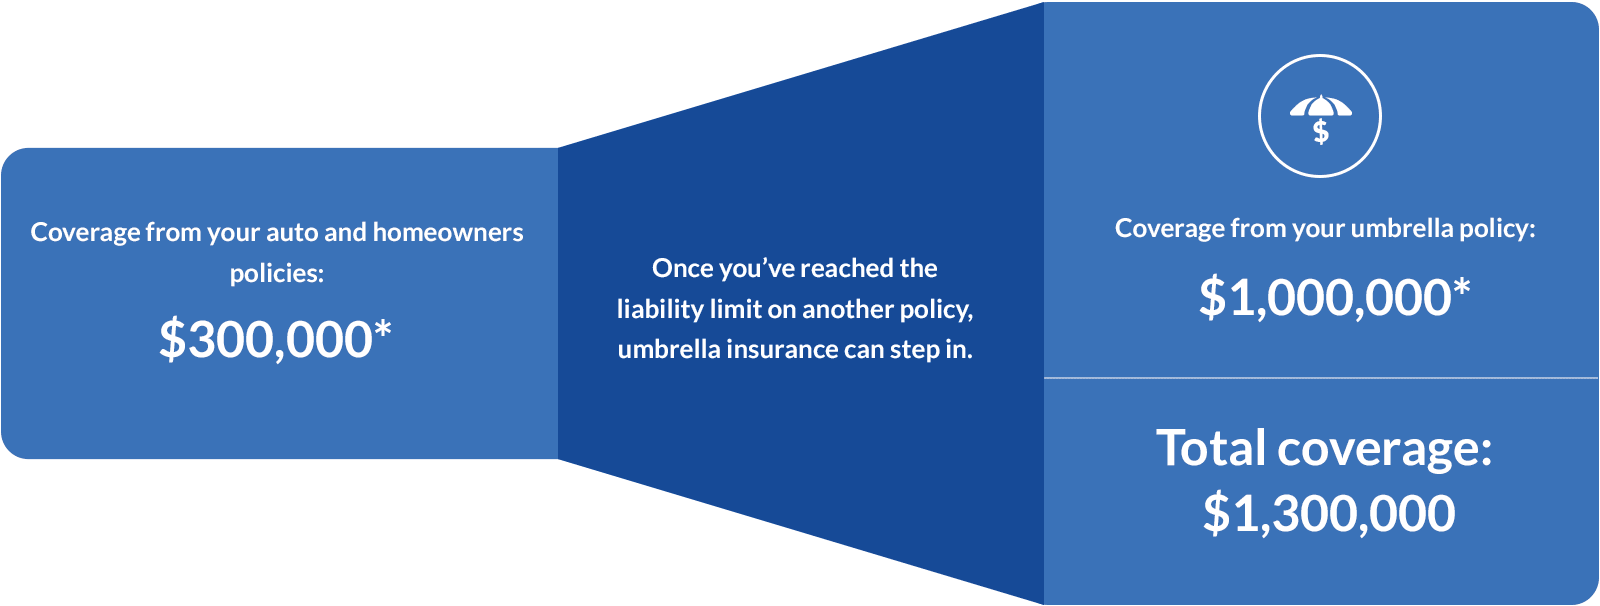 Umbrella Insurance Company with Logo - Umbrella Insurance a Free Quote Today